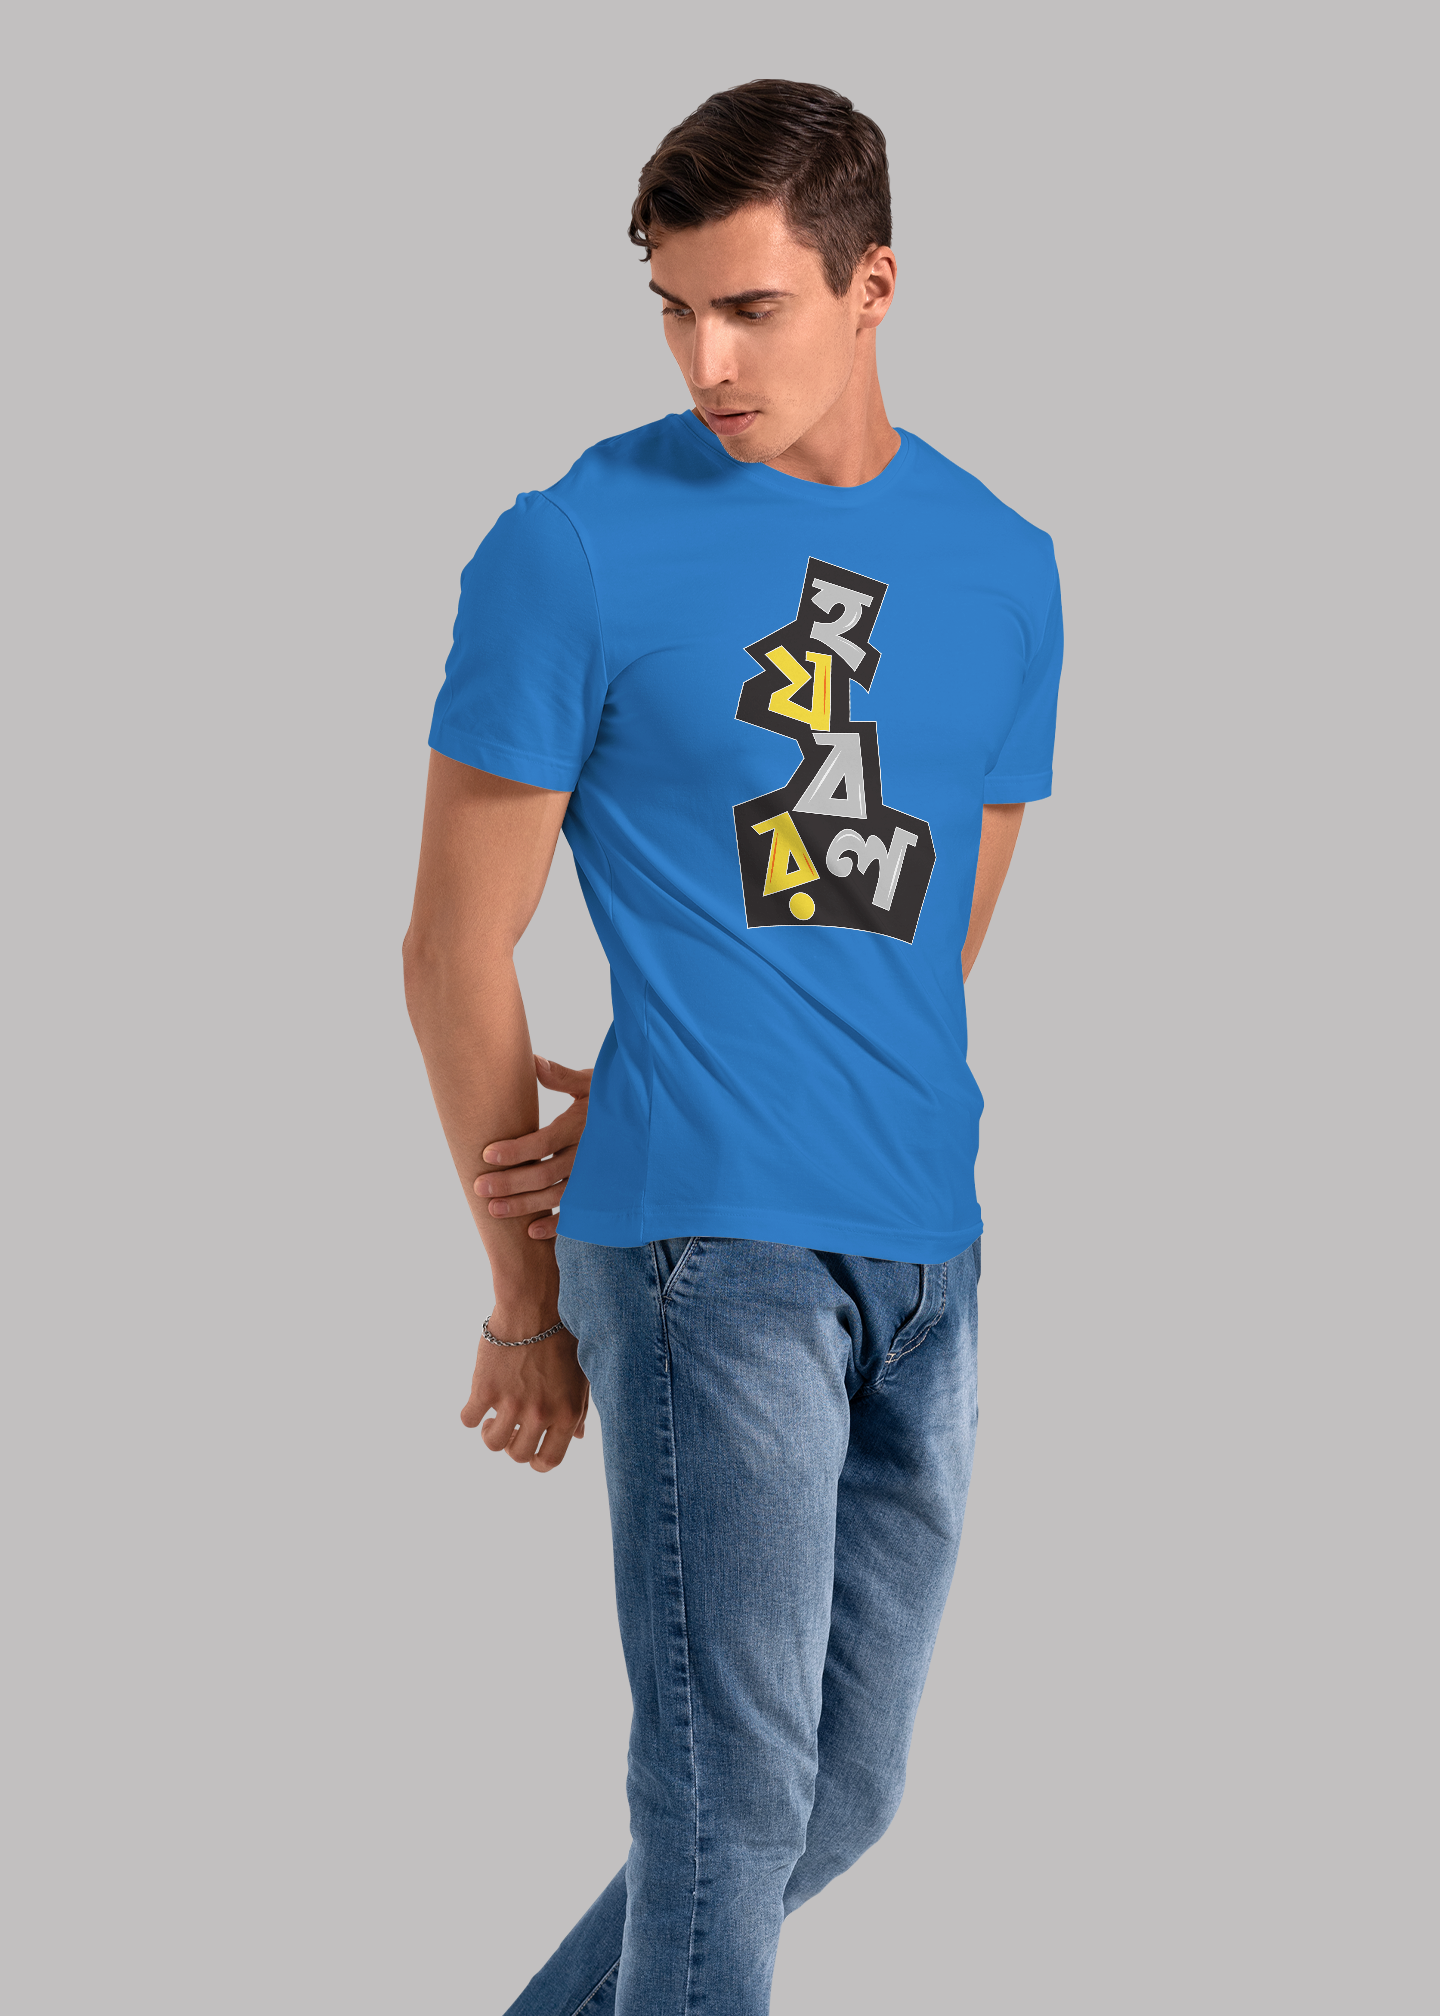 Ho jo bo ro lo bengali Printed Half Sleeve Premium Cotton T-shirt For Men